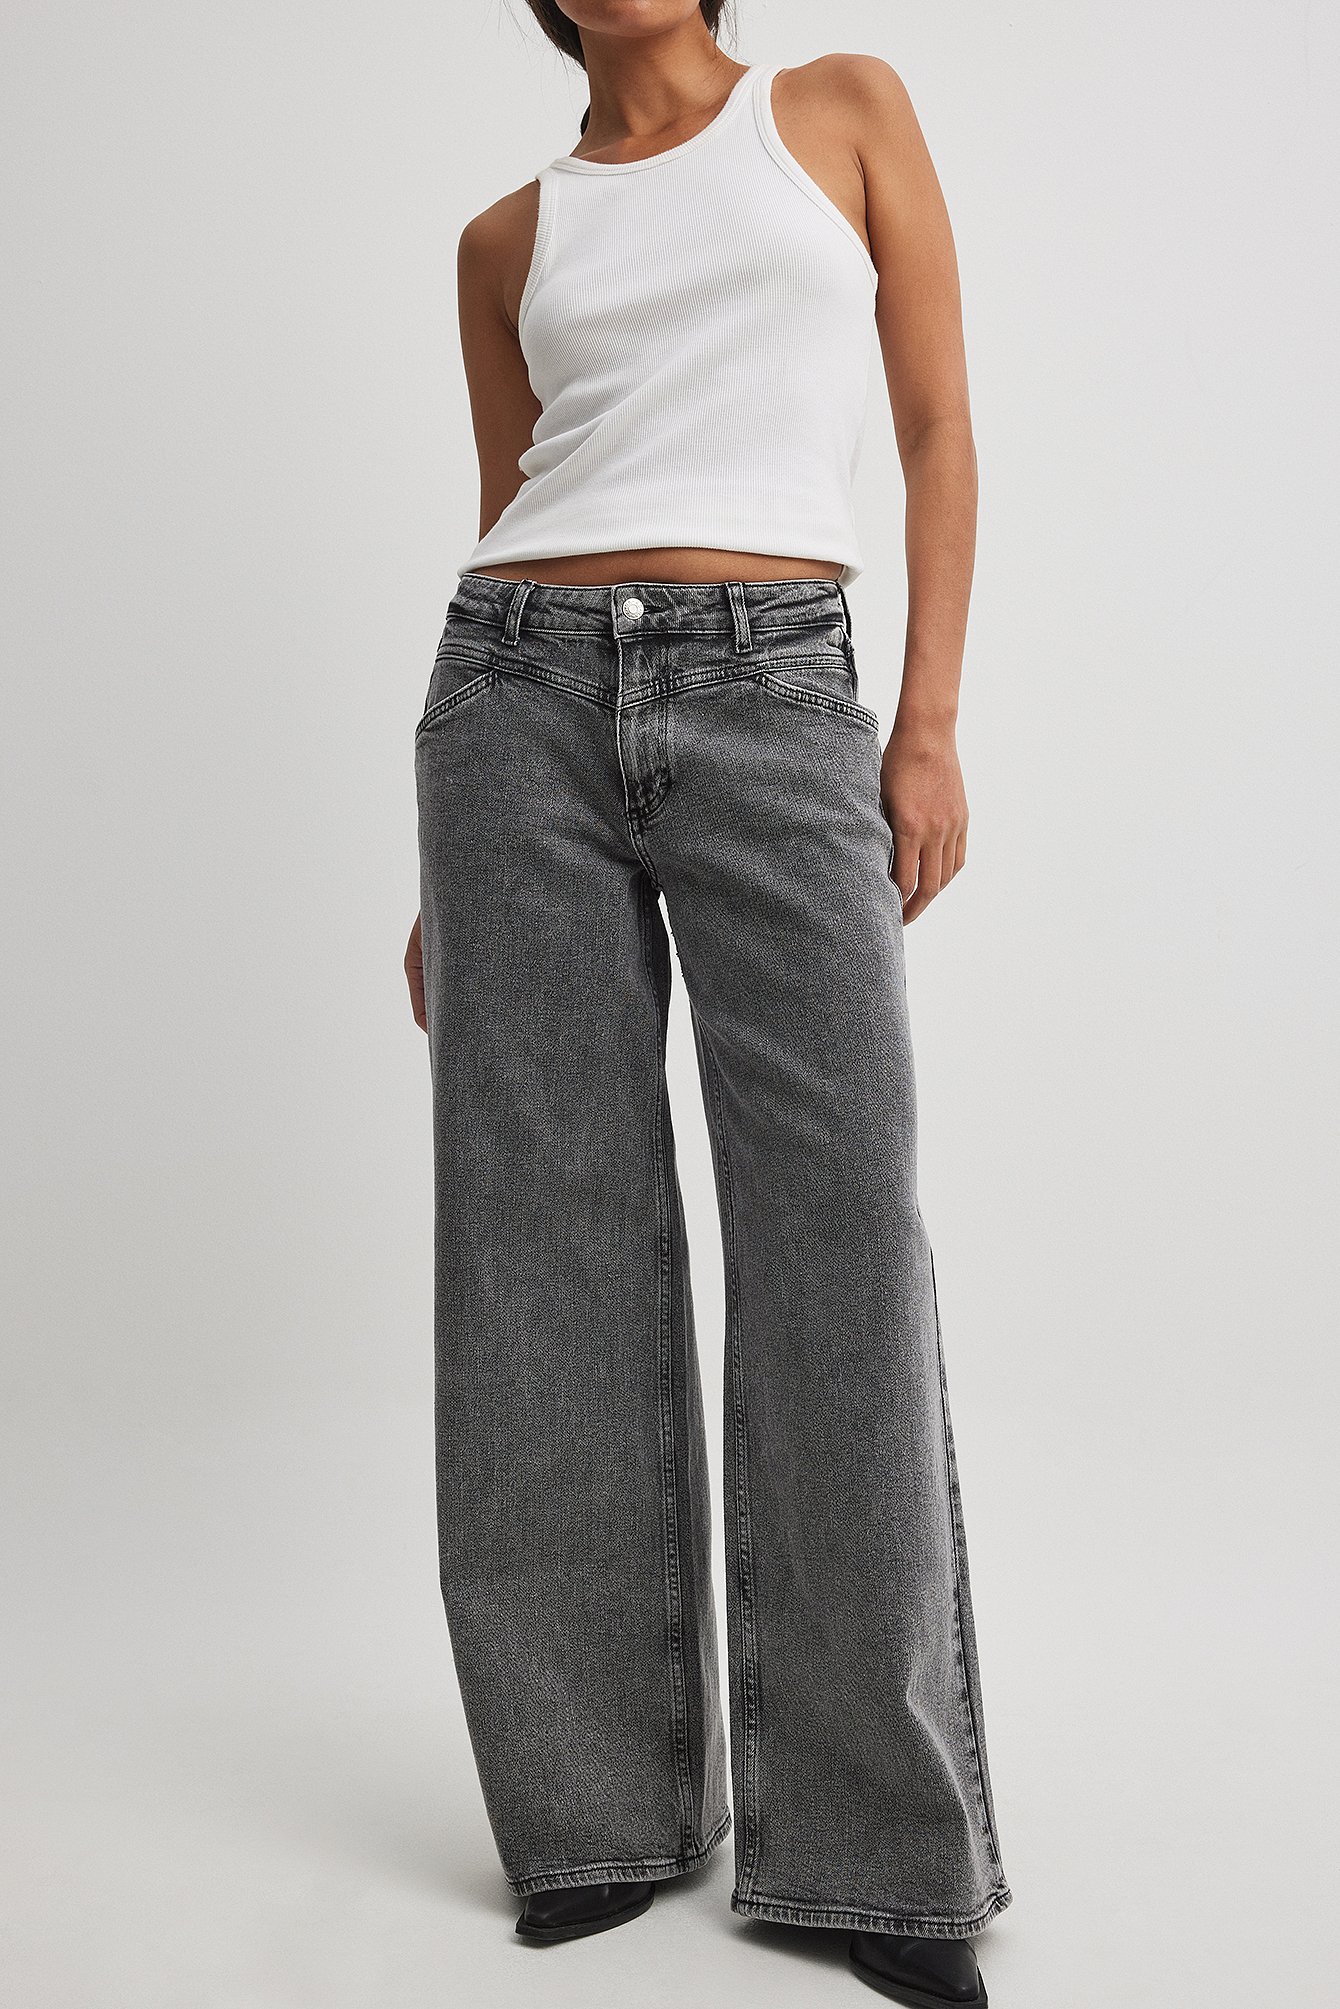 Wide-Leg Jeans for Women, Stylish Jeans